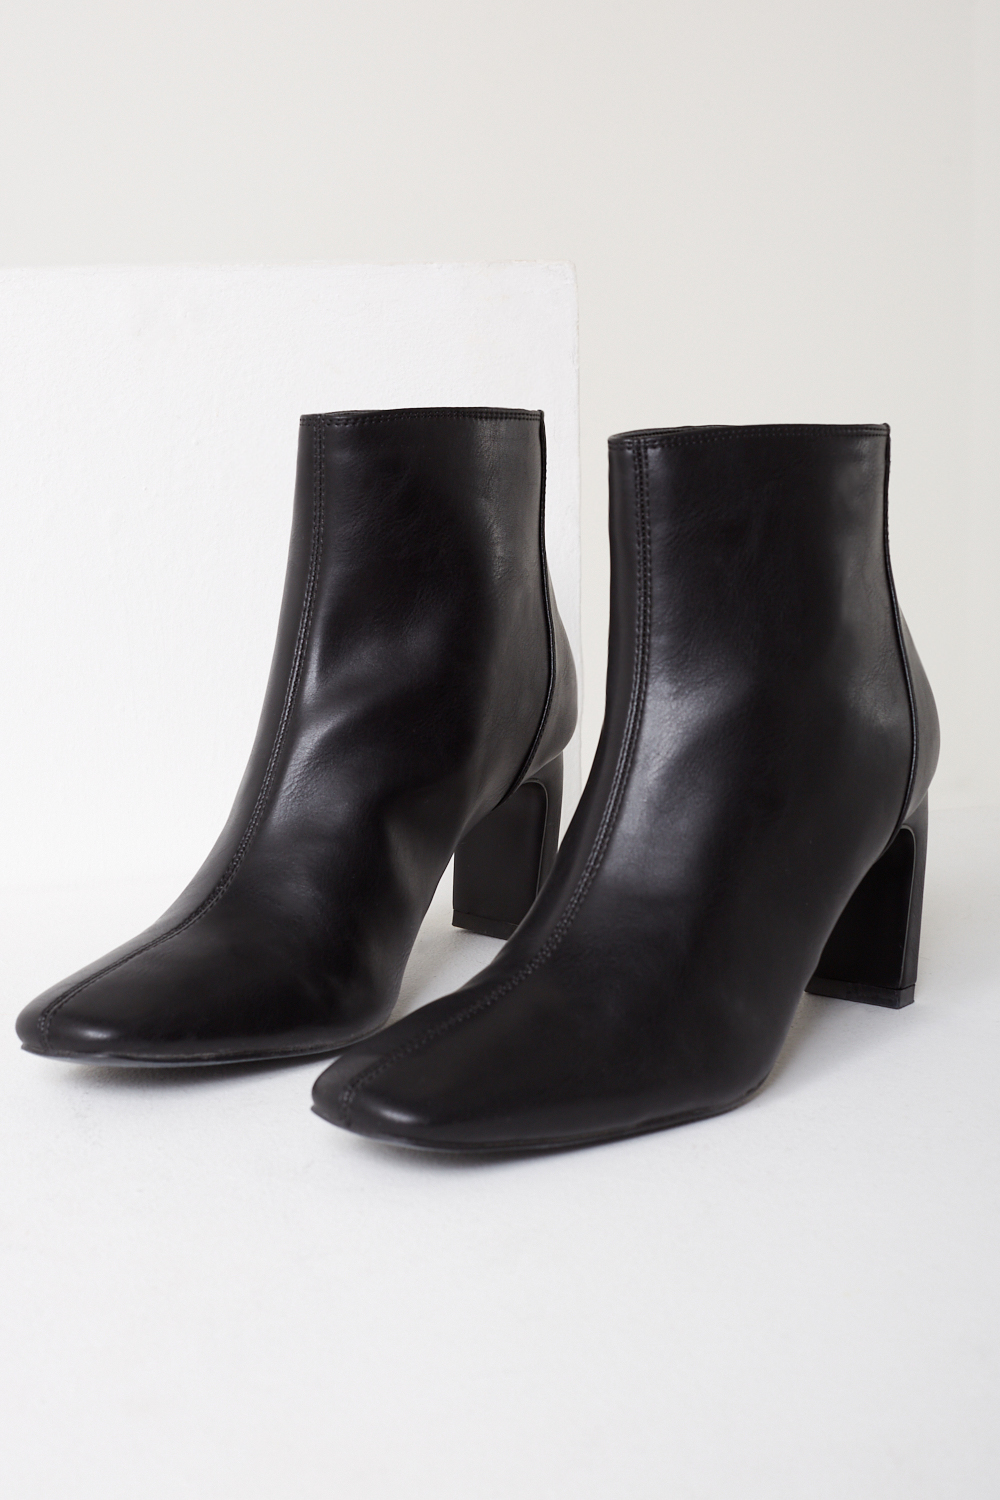 Vero Moda Tessa Heeled Ankle Boots in Black | iCLOTHING - iCLOTHING